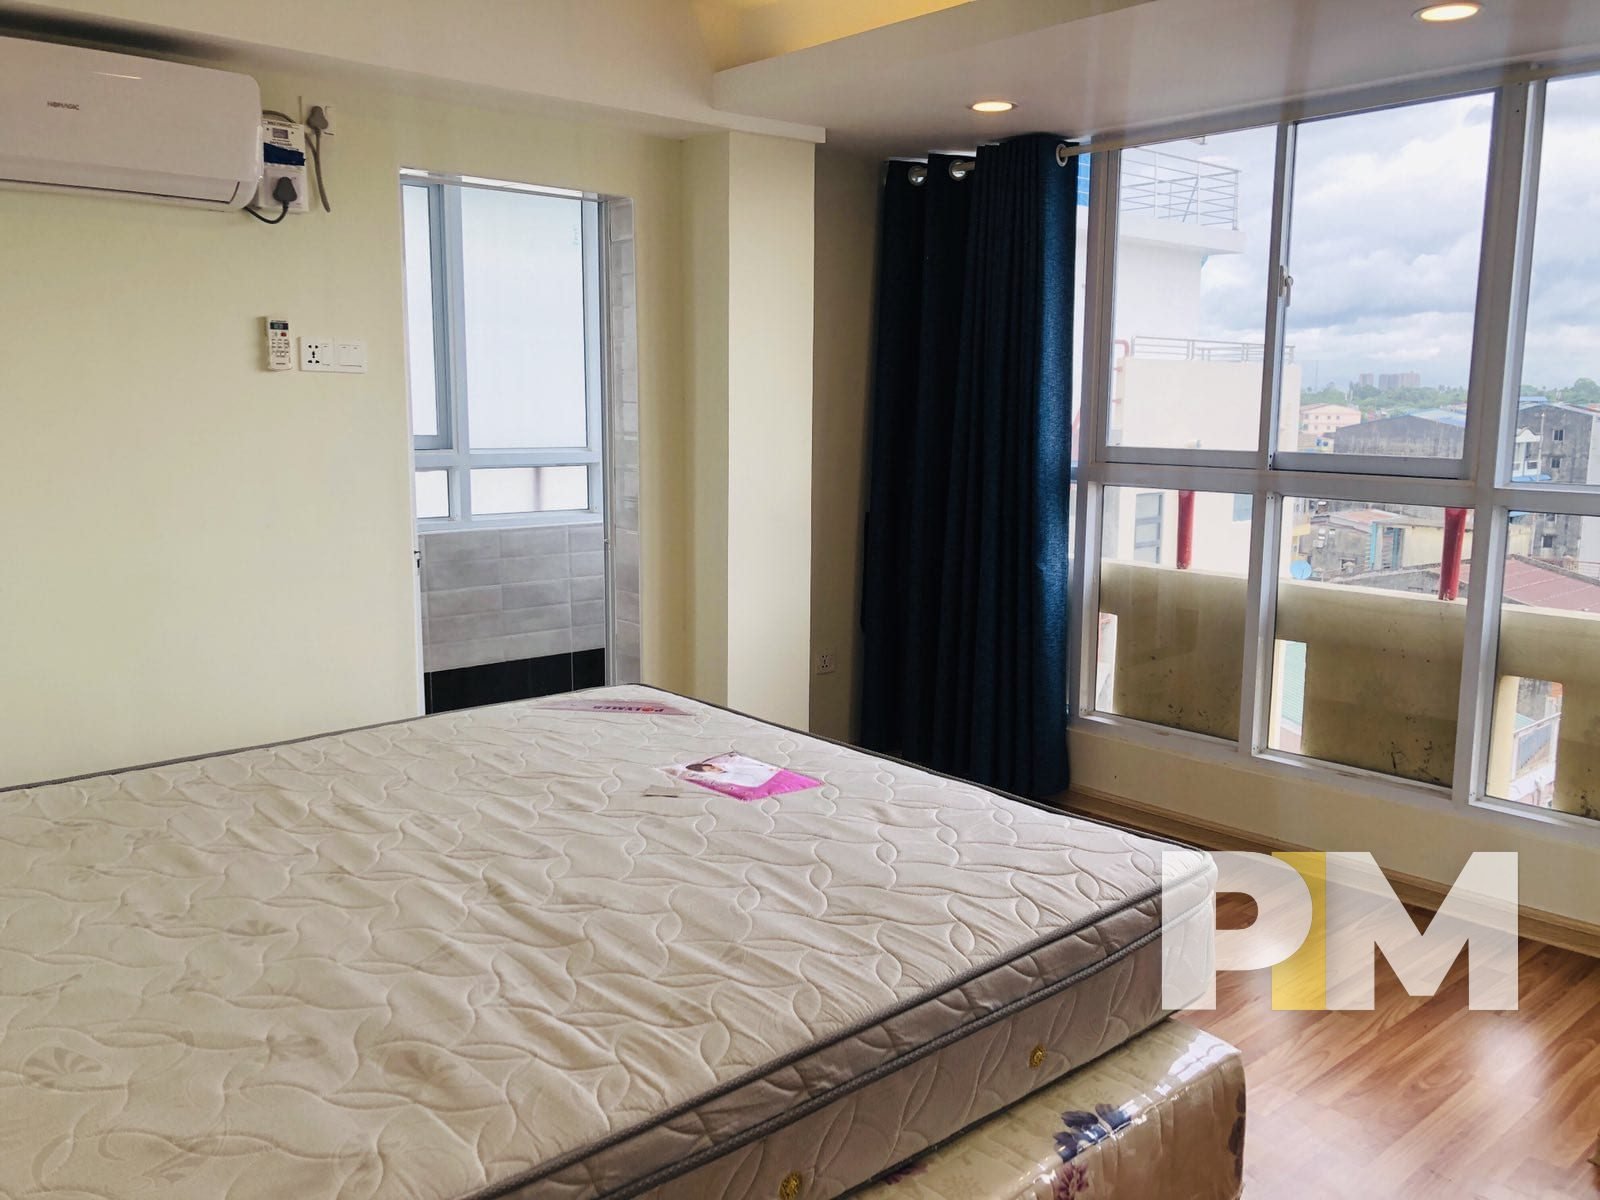 bedroom - apartment for rent in yangon